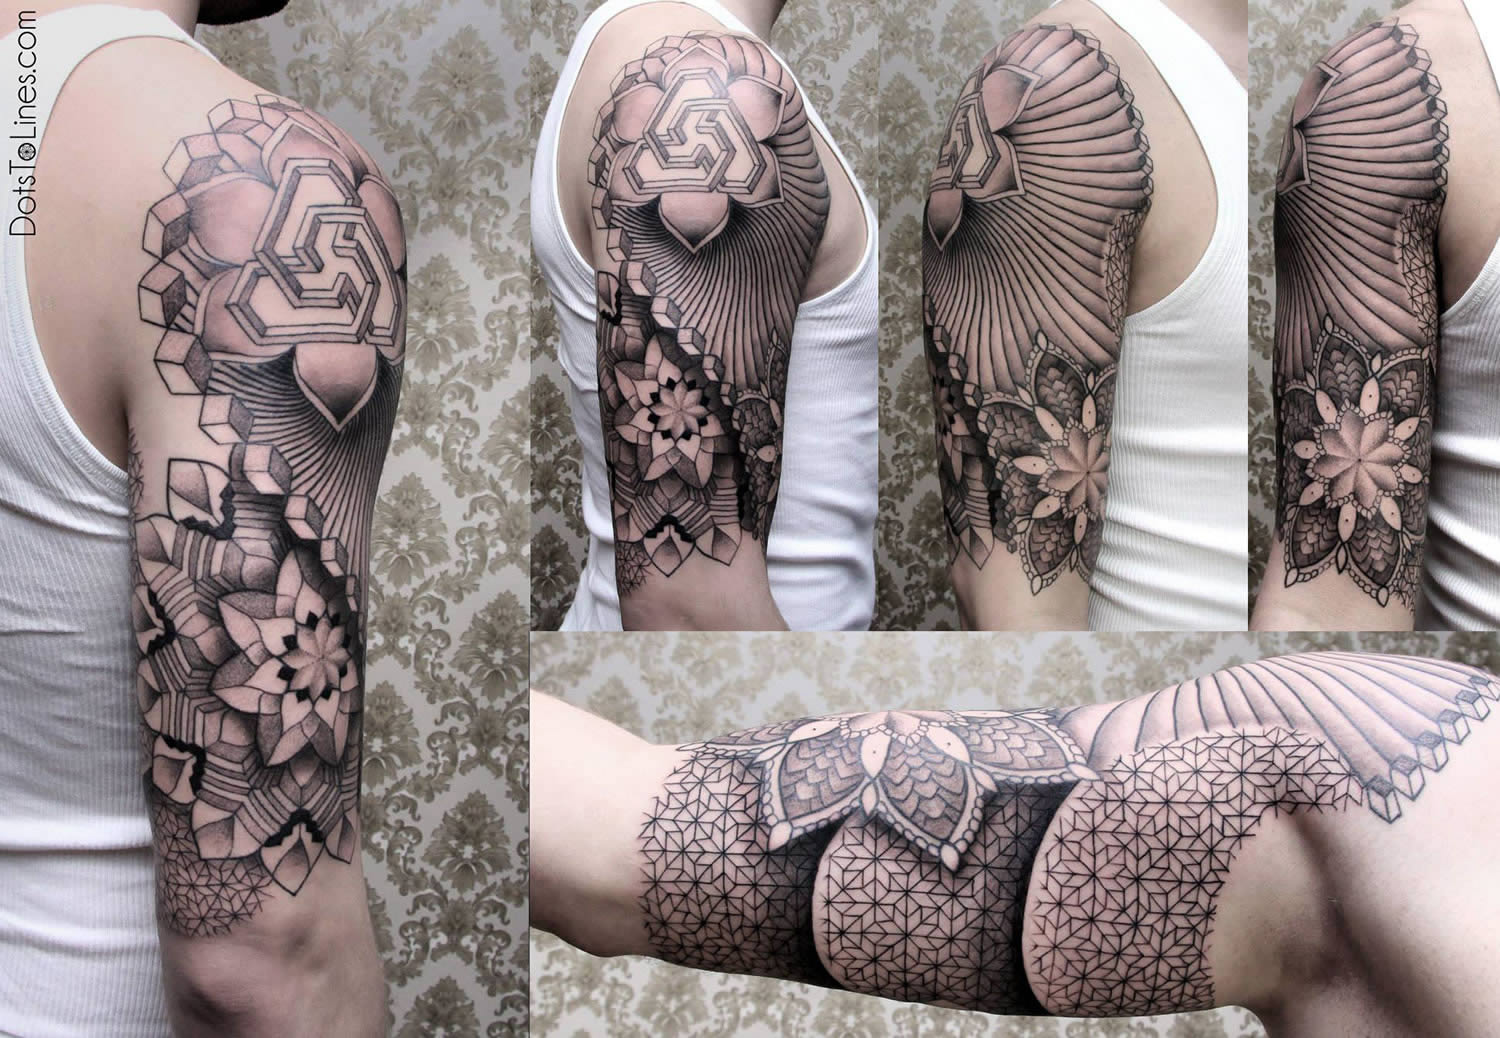 intricate pattern tattoo sleeve by chaim machlev, 2014